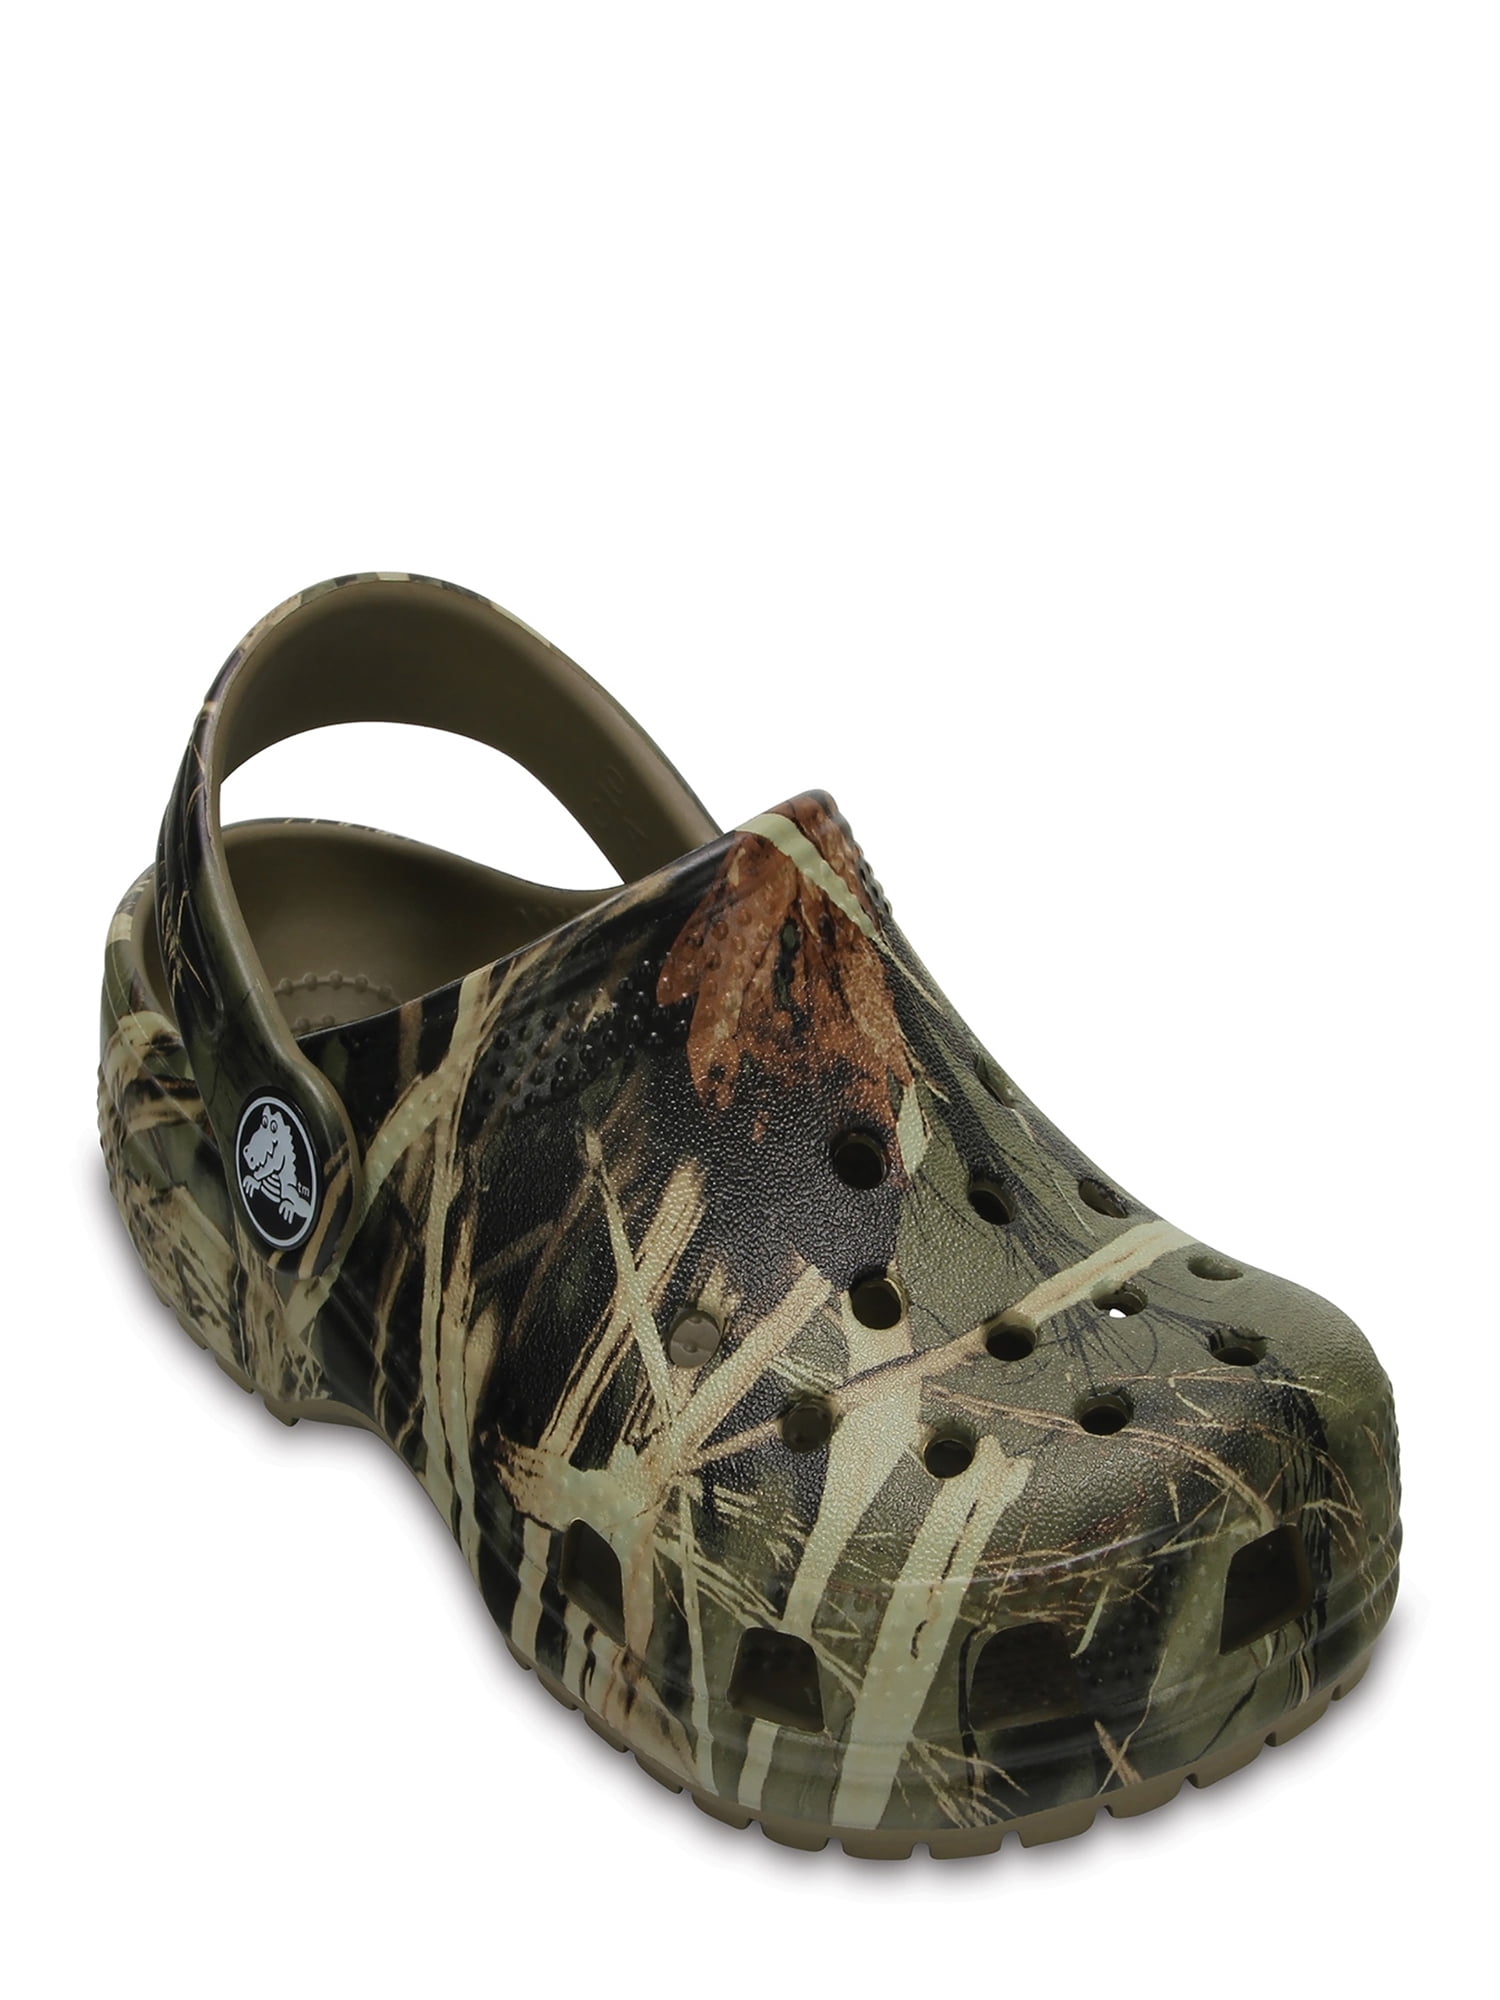 CROCS Classic Realtree Camouflage Clogs Sandals Shoes vegan 